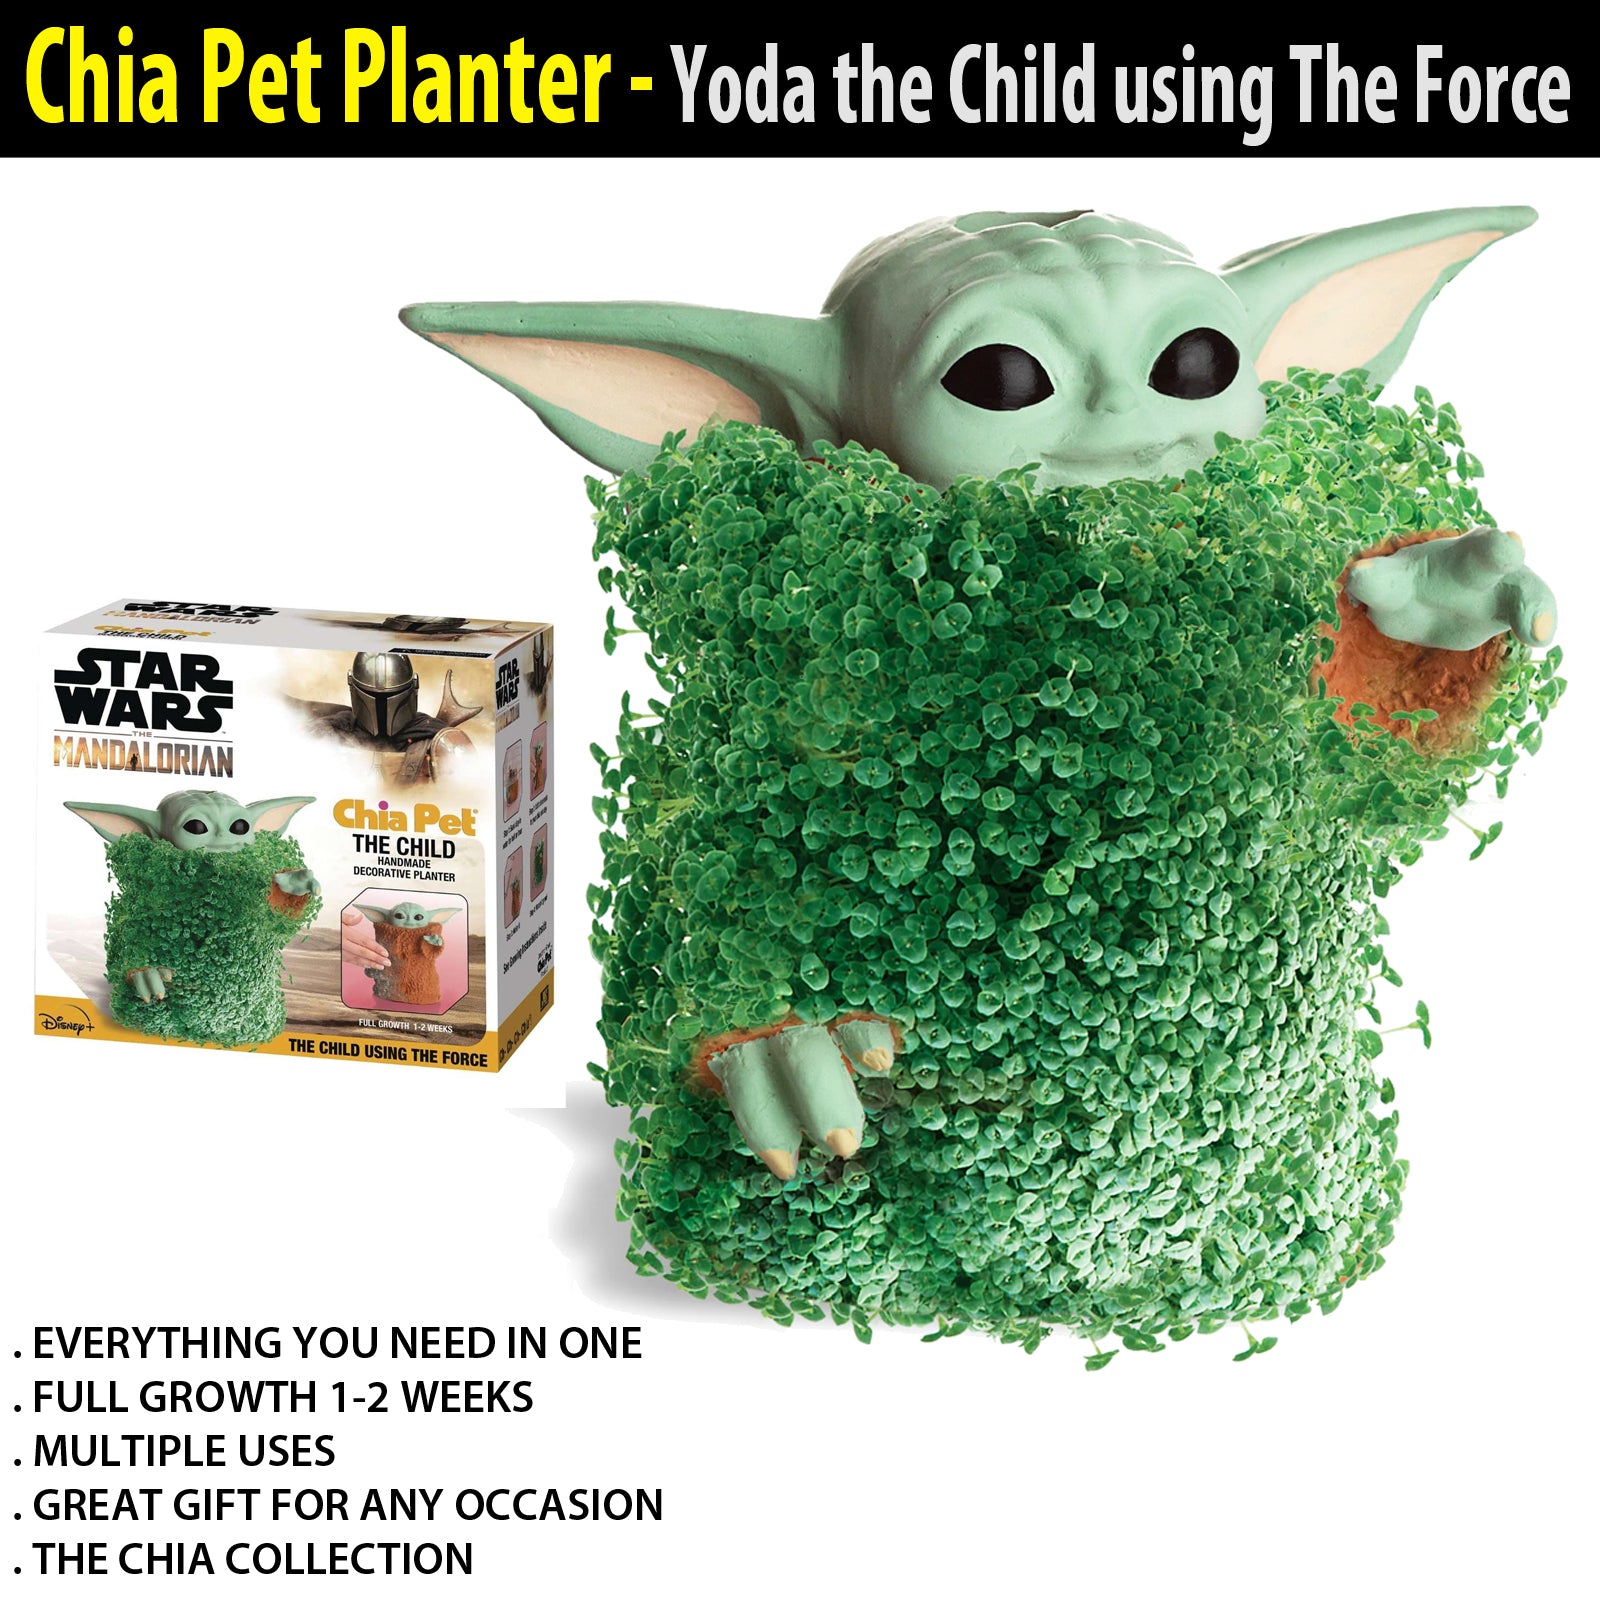 Star Wars The Mandalorian The Child Baby Yoda Chia Pet Decorative Planter